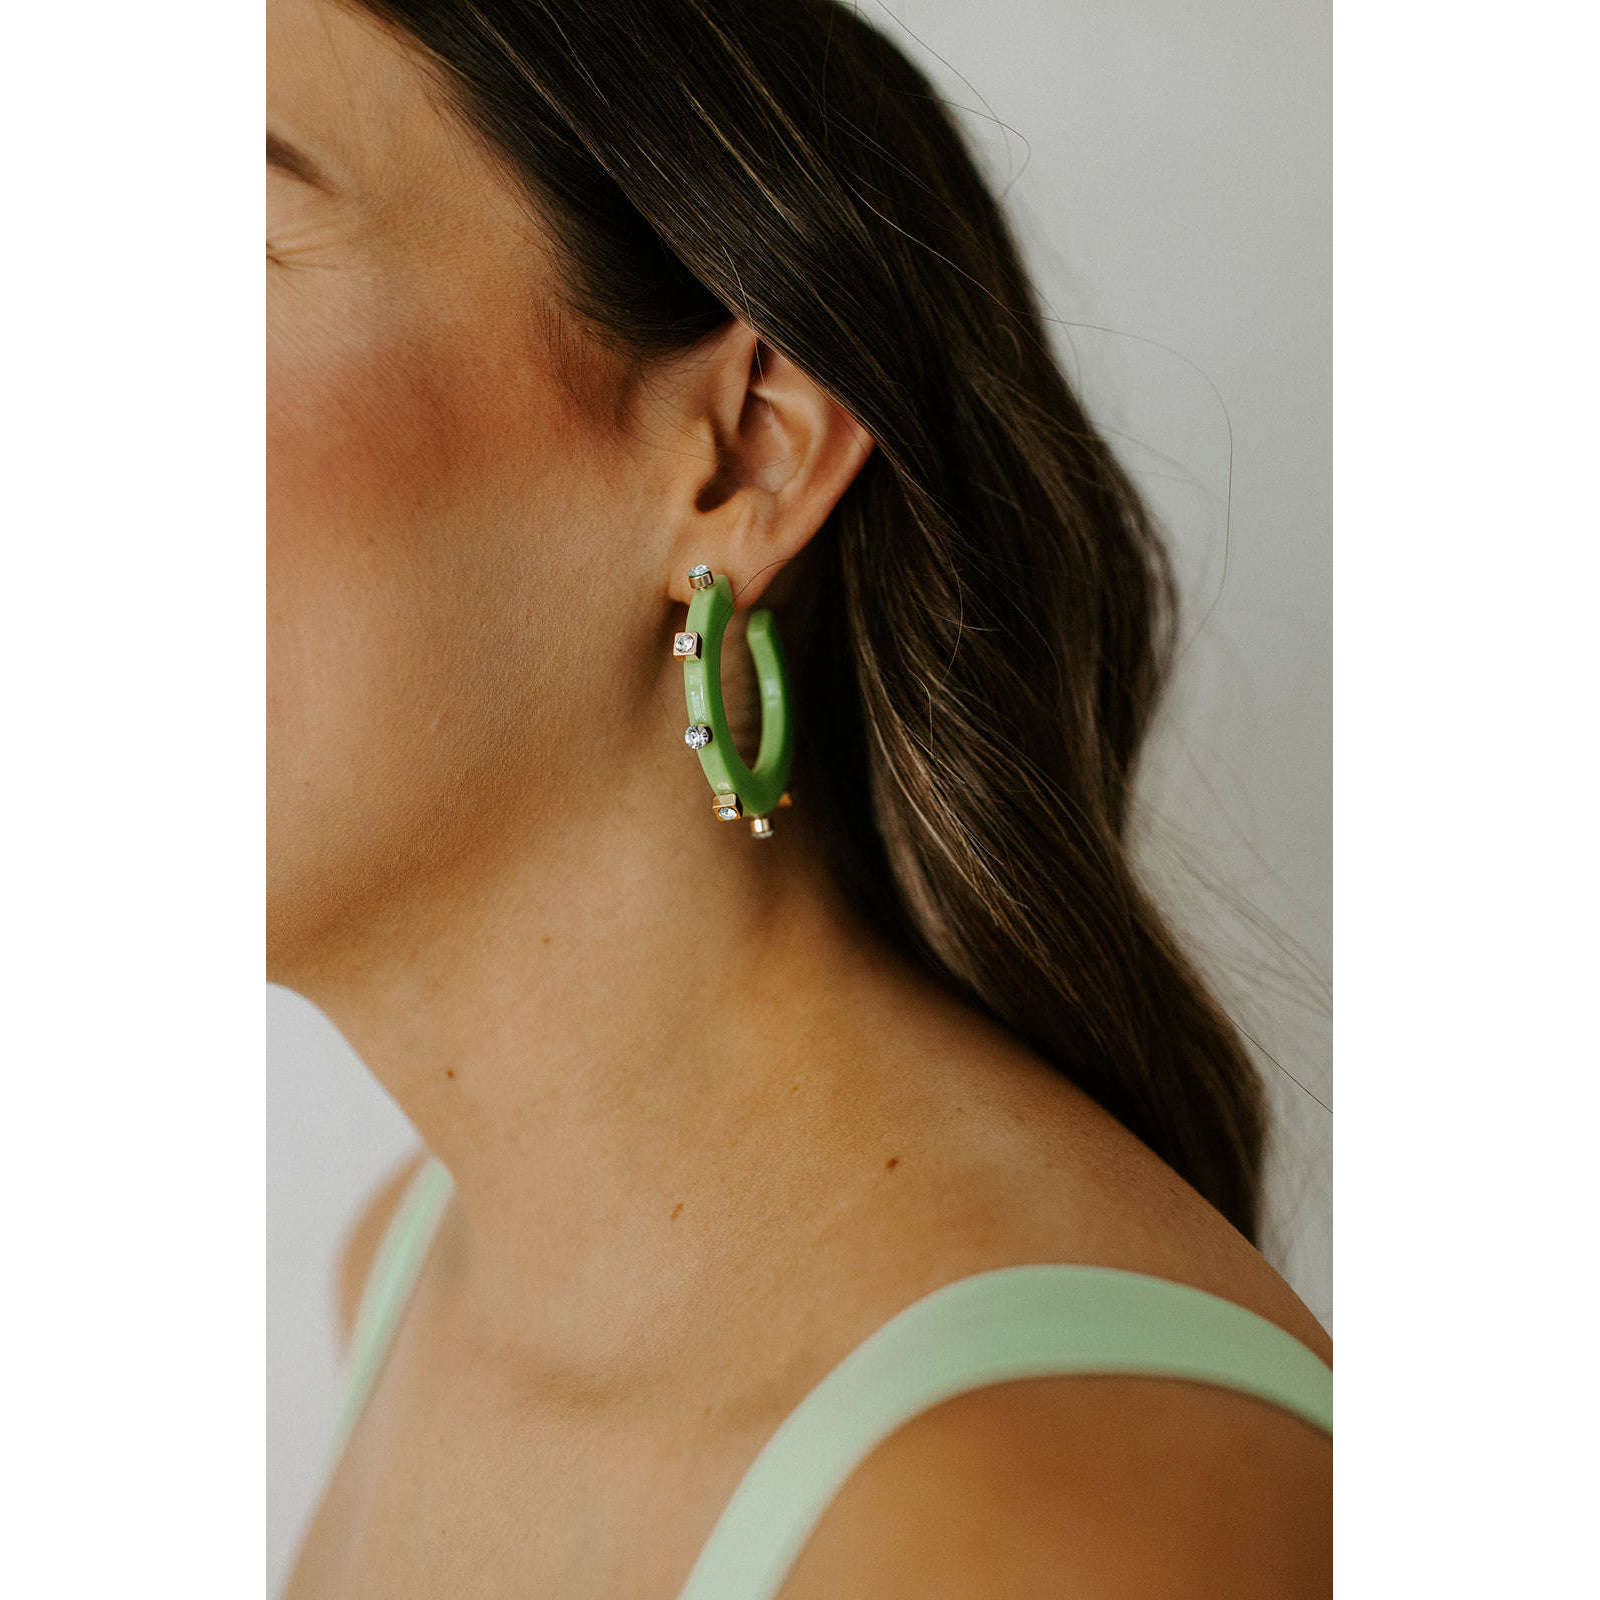 8.28 Boutique:Smith & Co. Jewel Design,Smith & Co. Jewel Design Small City Girl  Hoop Earrings,Earrings